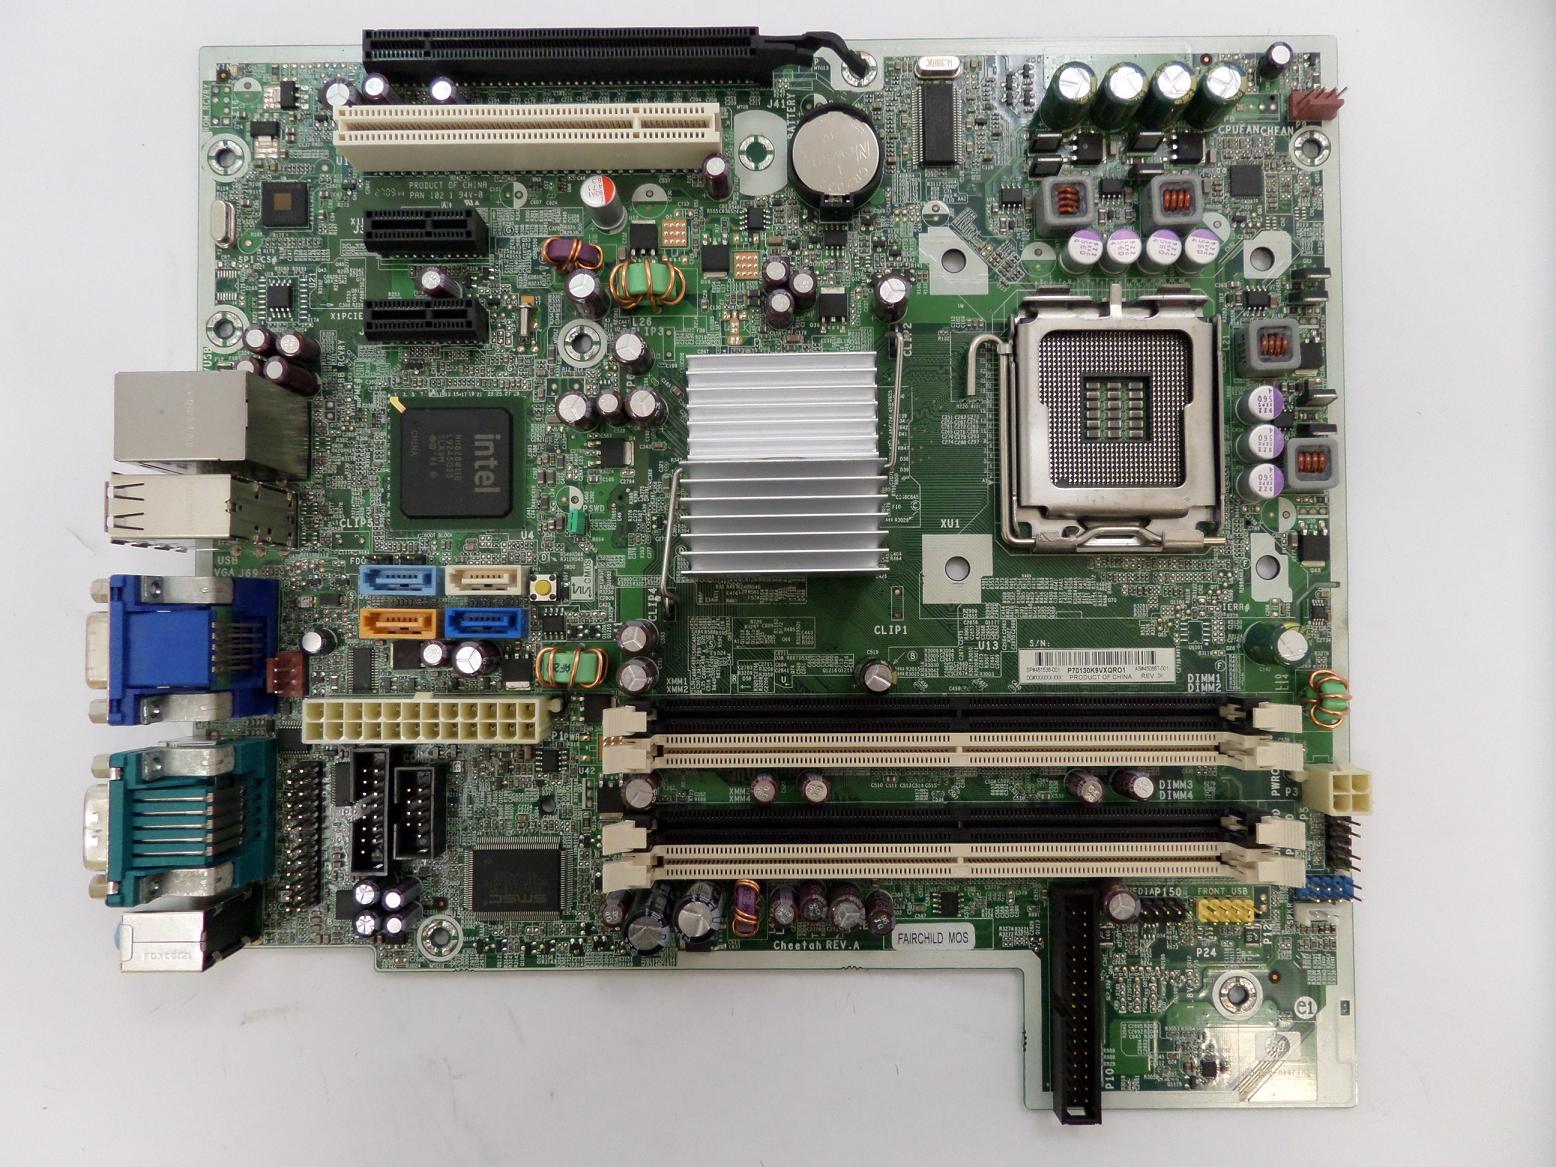 461536-001 - Compaq DC5800 SFF Intel LGA755 Motherboard - Refurbished